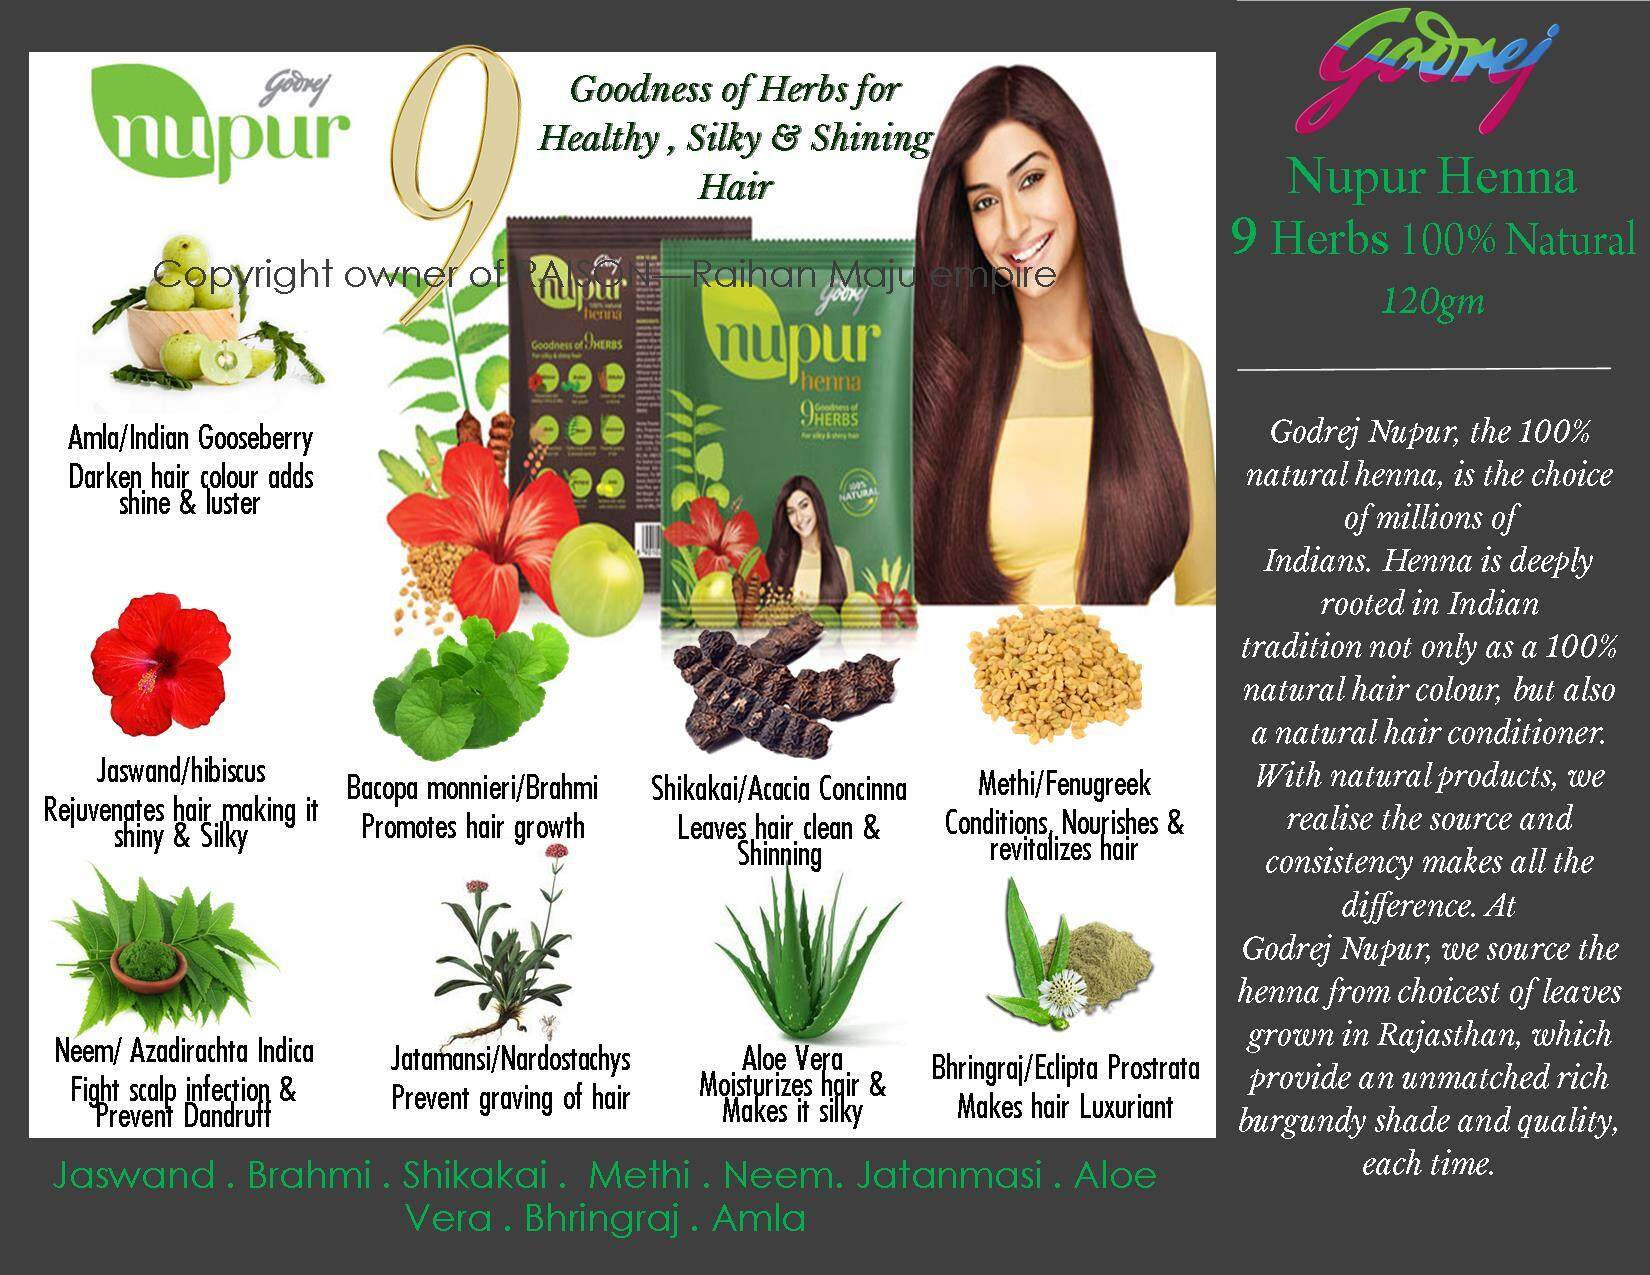 Godrej Nupur Henna 9 Herbs 100% Natural 120gm | Lazada